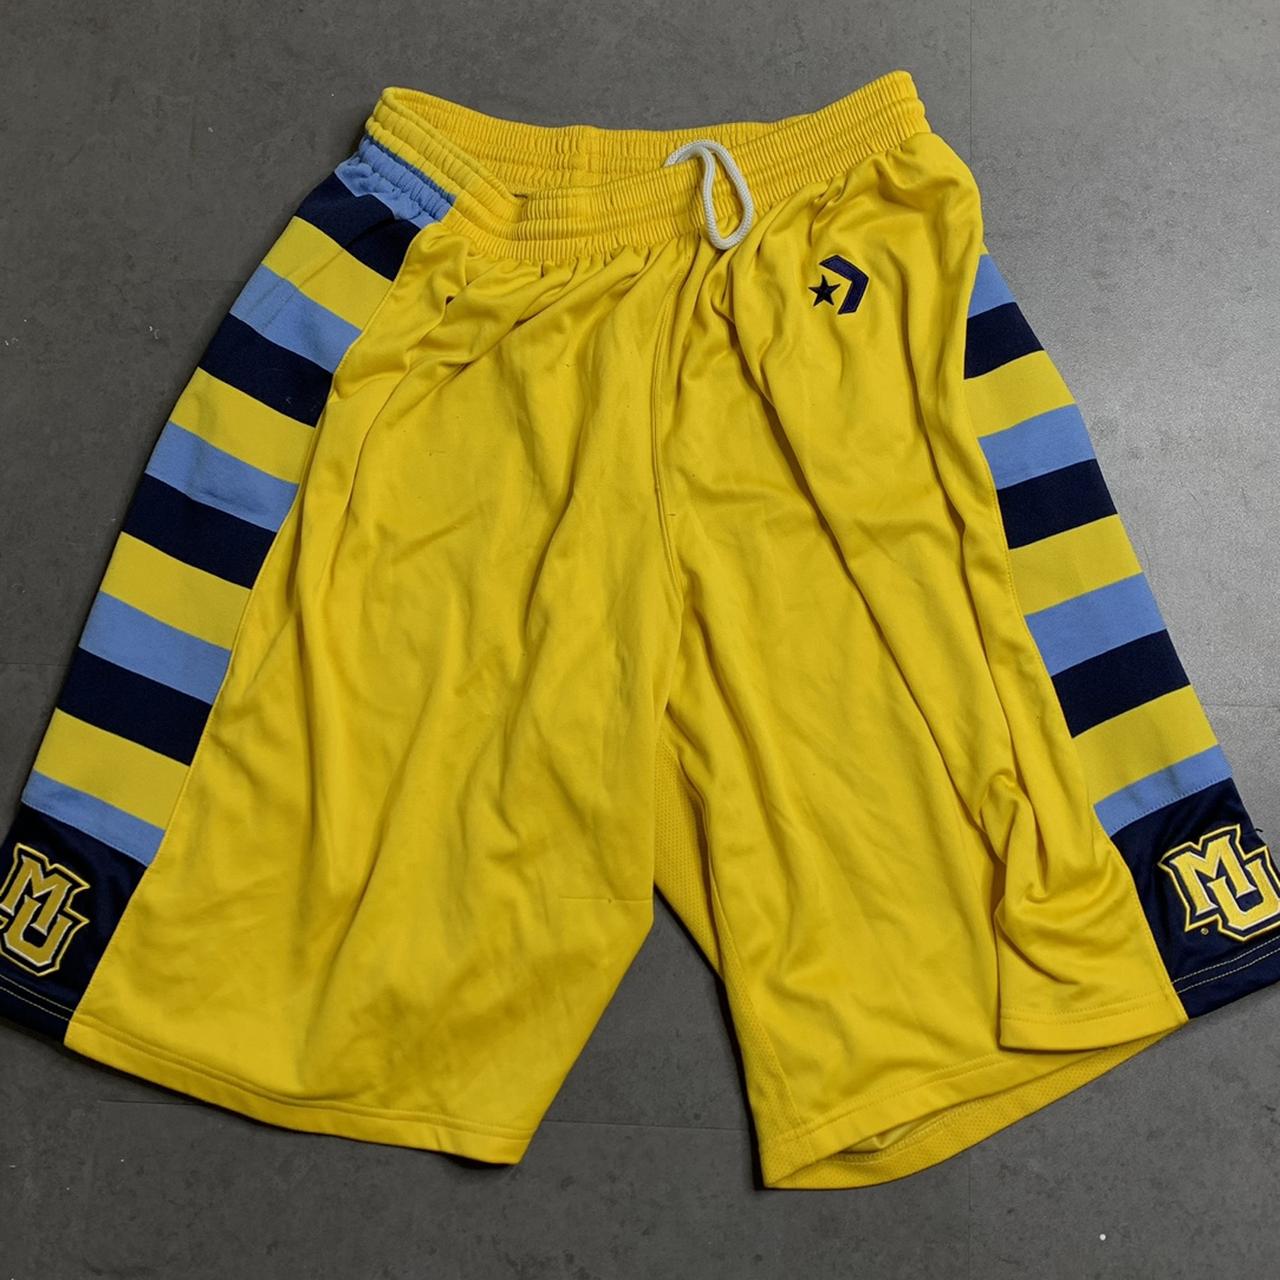 Converse Men's Yellow Shorts